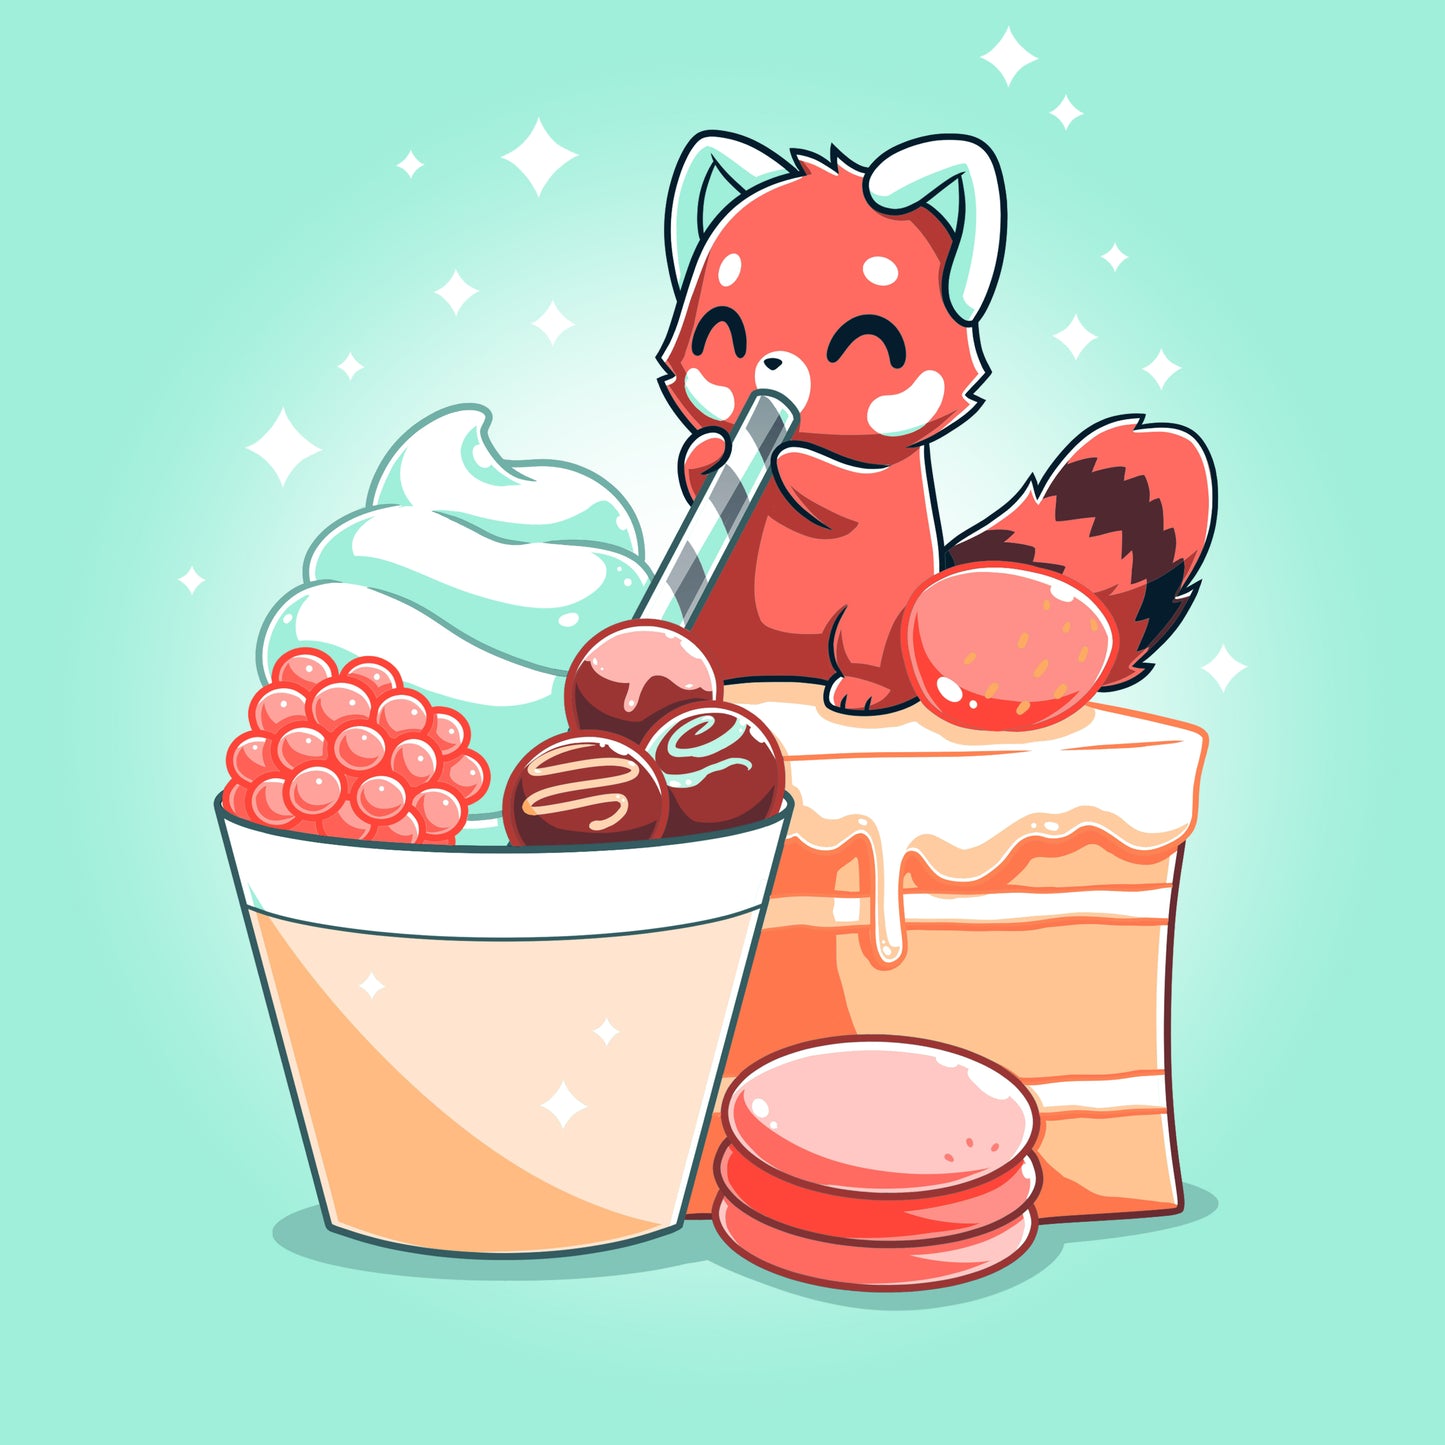 A cartoon fox sitting next to a cup of Dessert First ice cream on a TeeTurtle t-shirt.